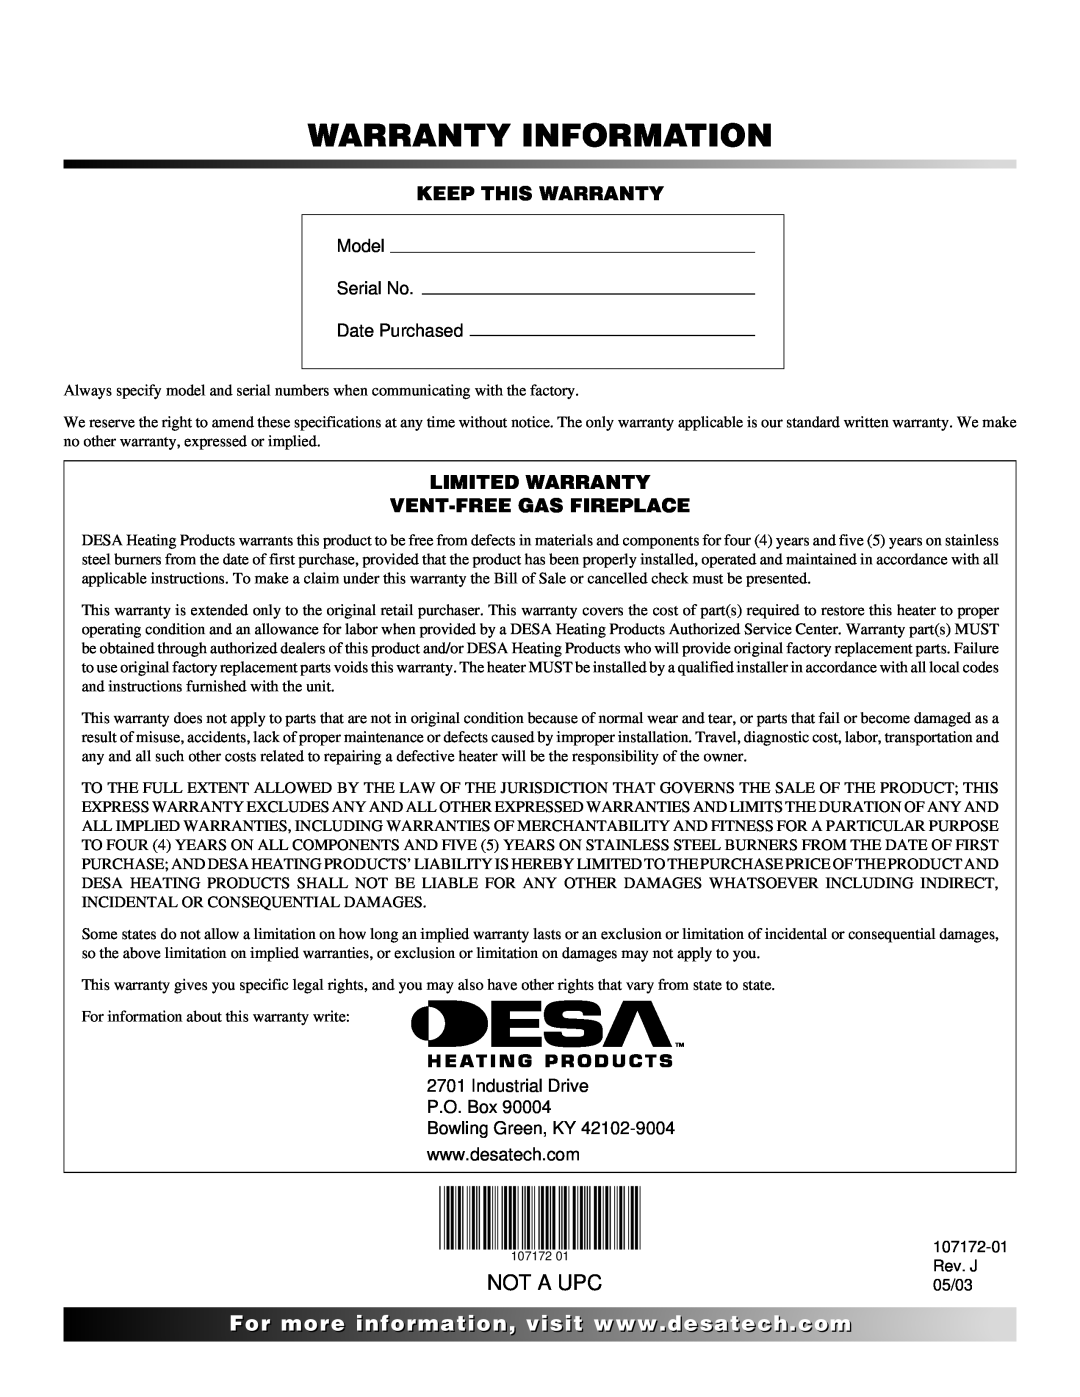 Desa EFS33PRA Warranty Information, Not A Upc, Keep This Warranty, Limited Warranty Vent-Freegas Fireplace 